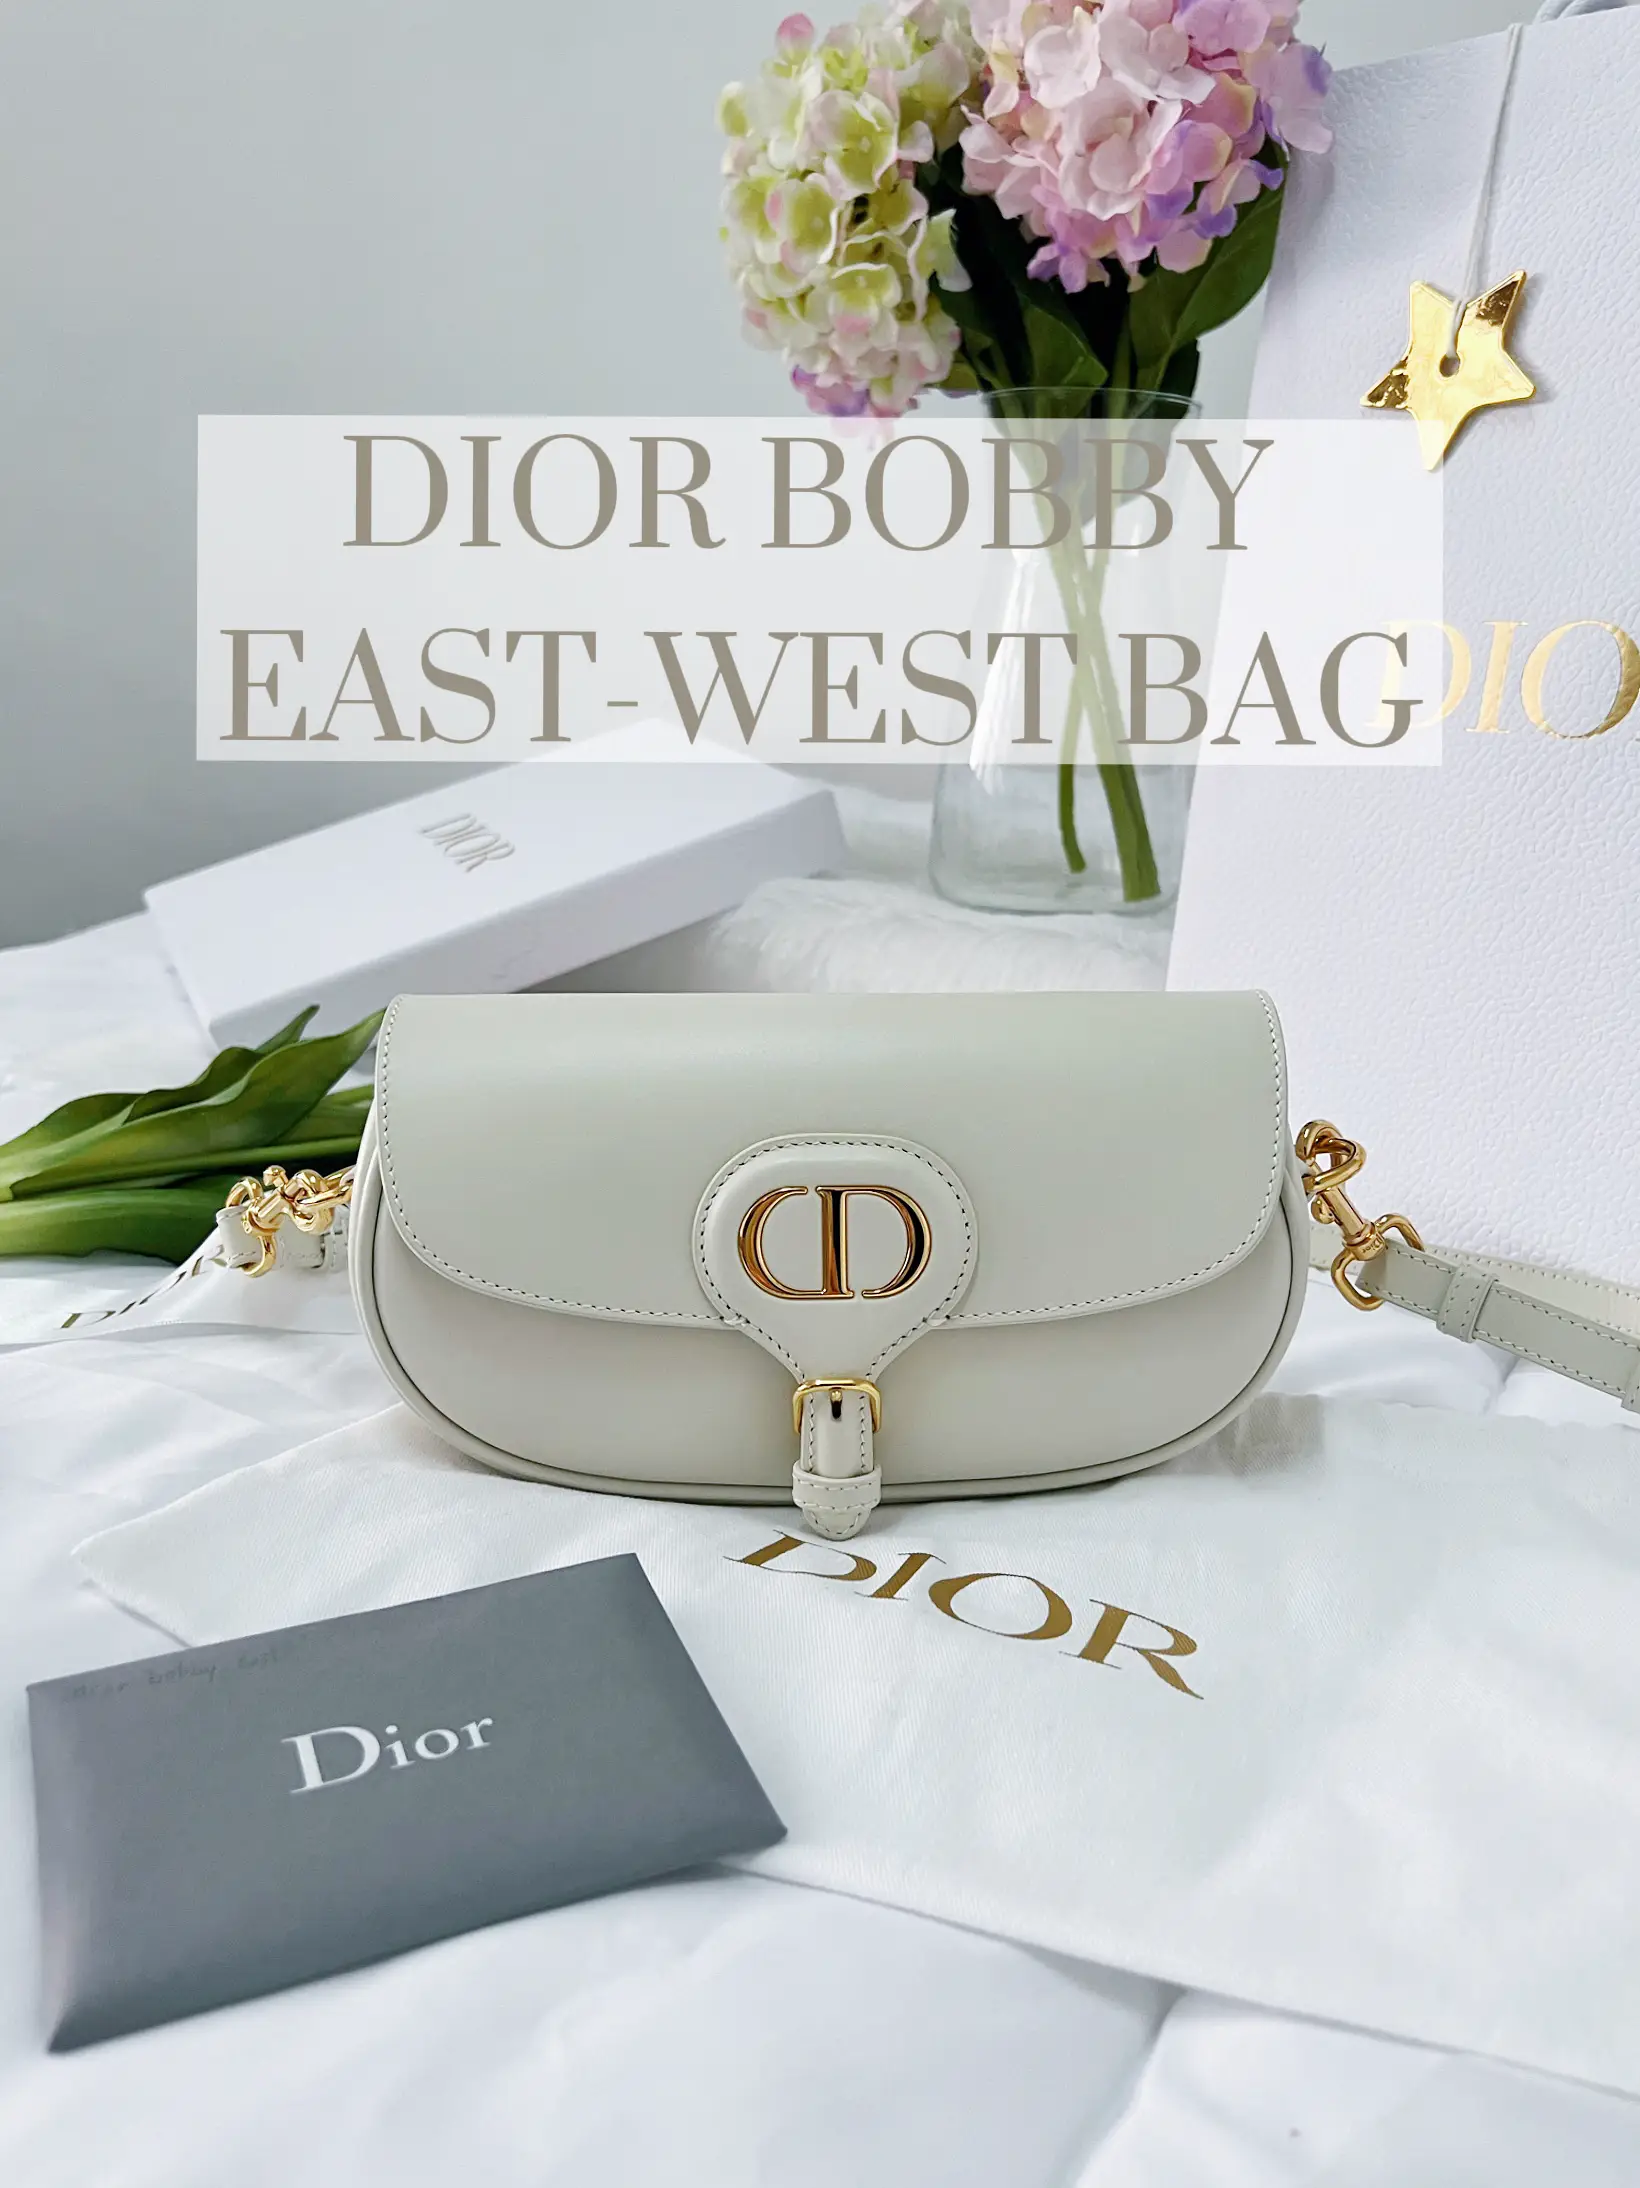 Dior Bobby East-West Bag